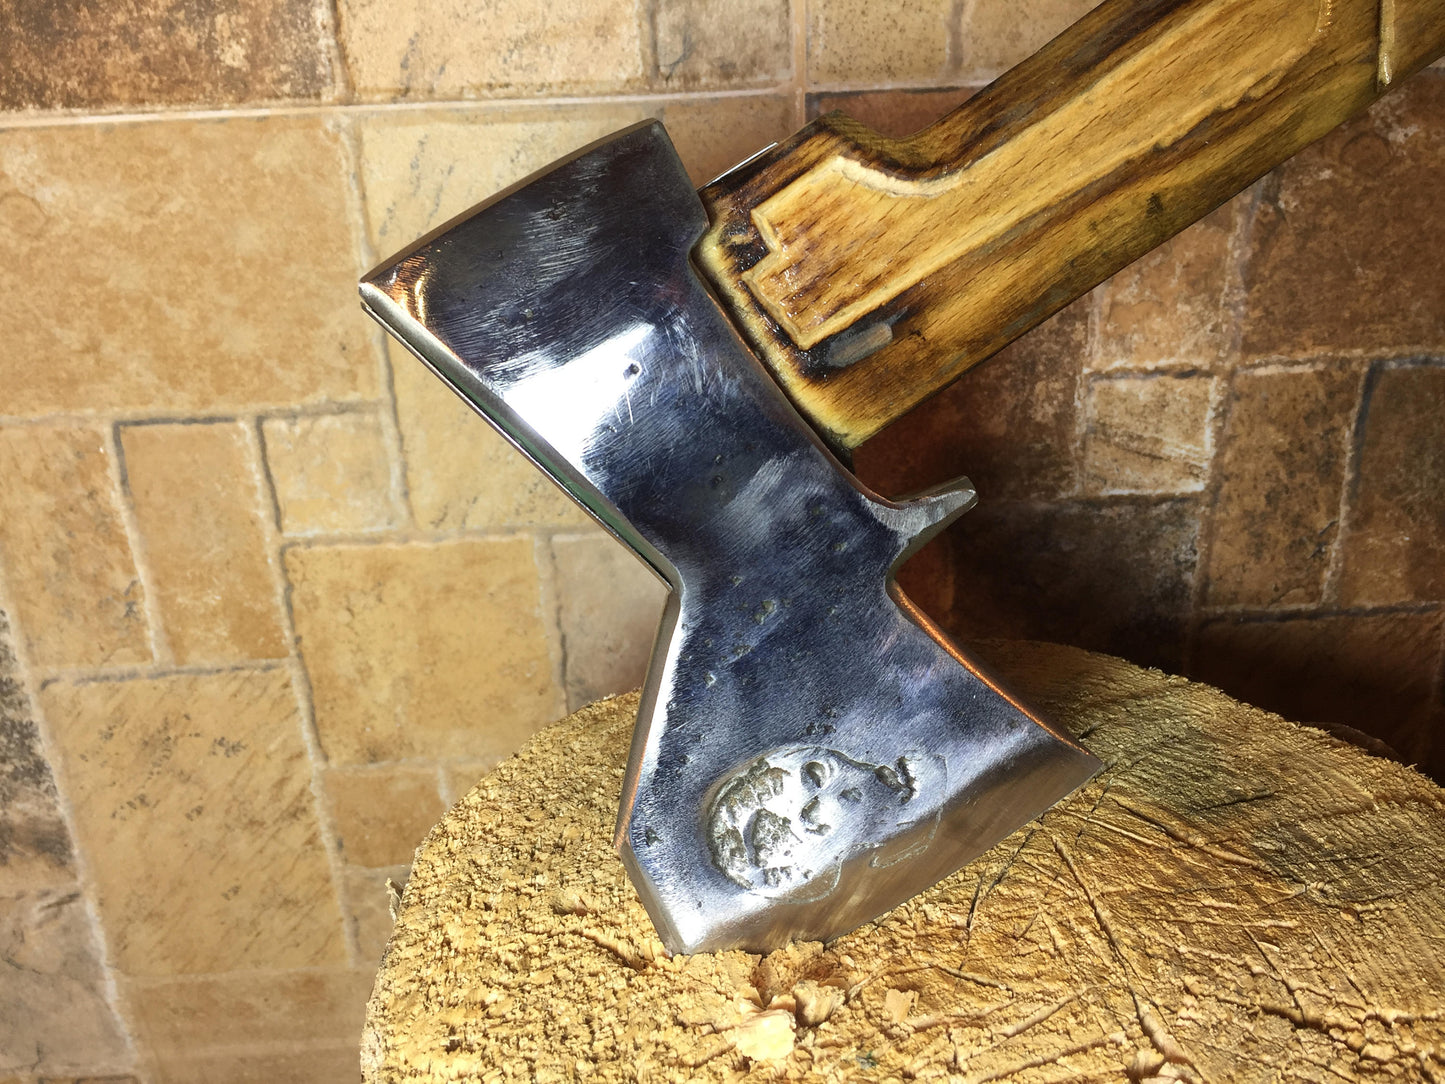 Viking axe, tomahawk, throwing hatchet, viking bearded axe, viking style axes, viking knife, viking decor, viking art,viking sword,weapon ax